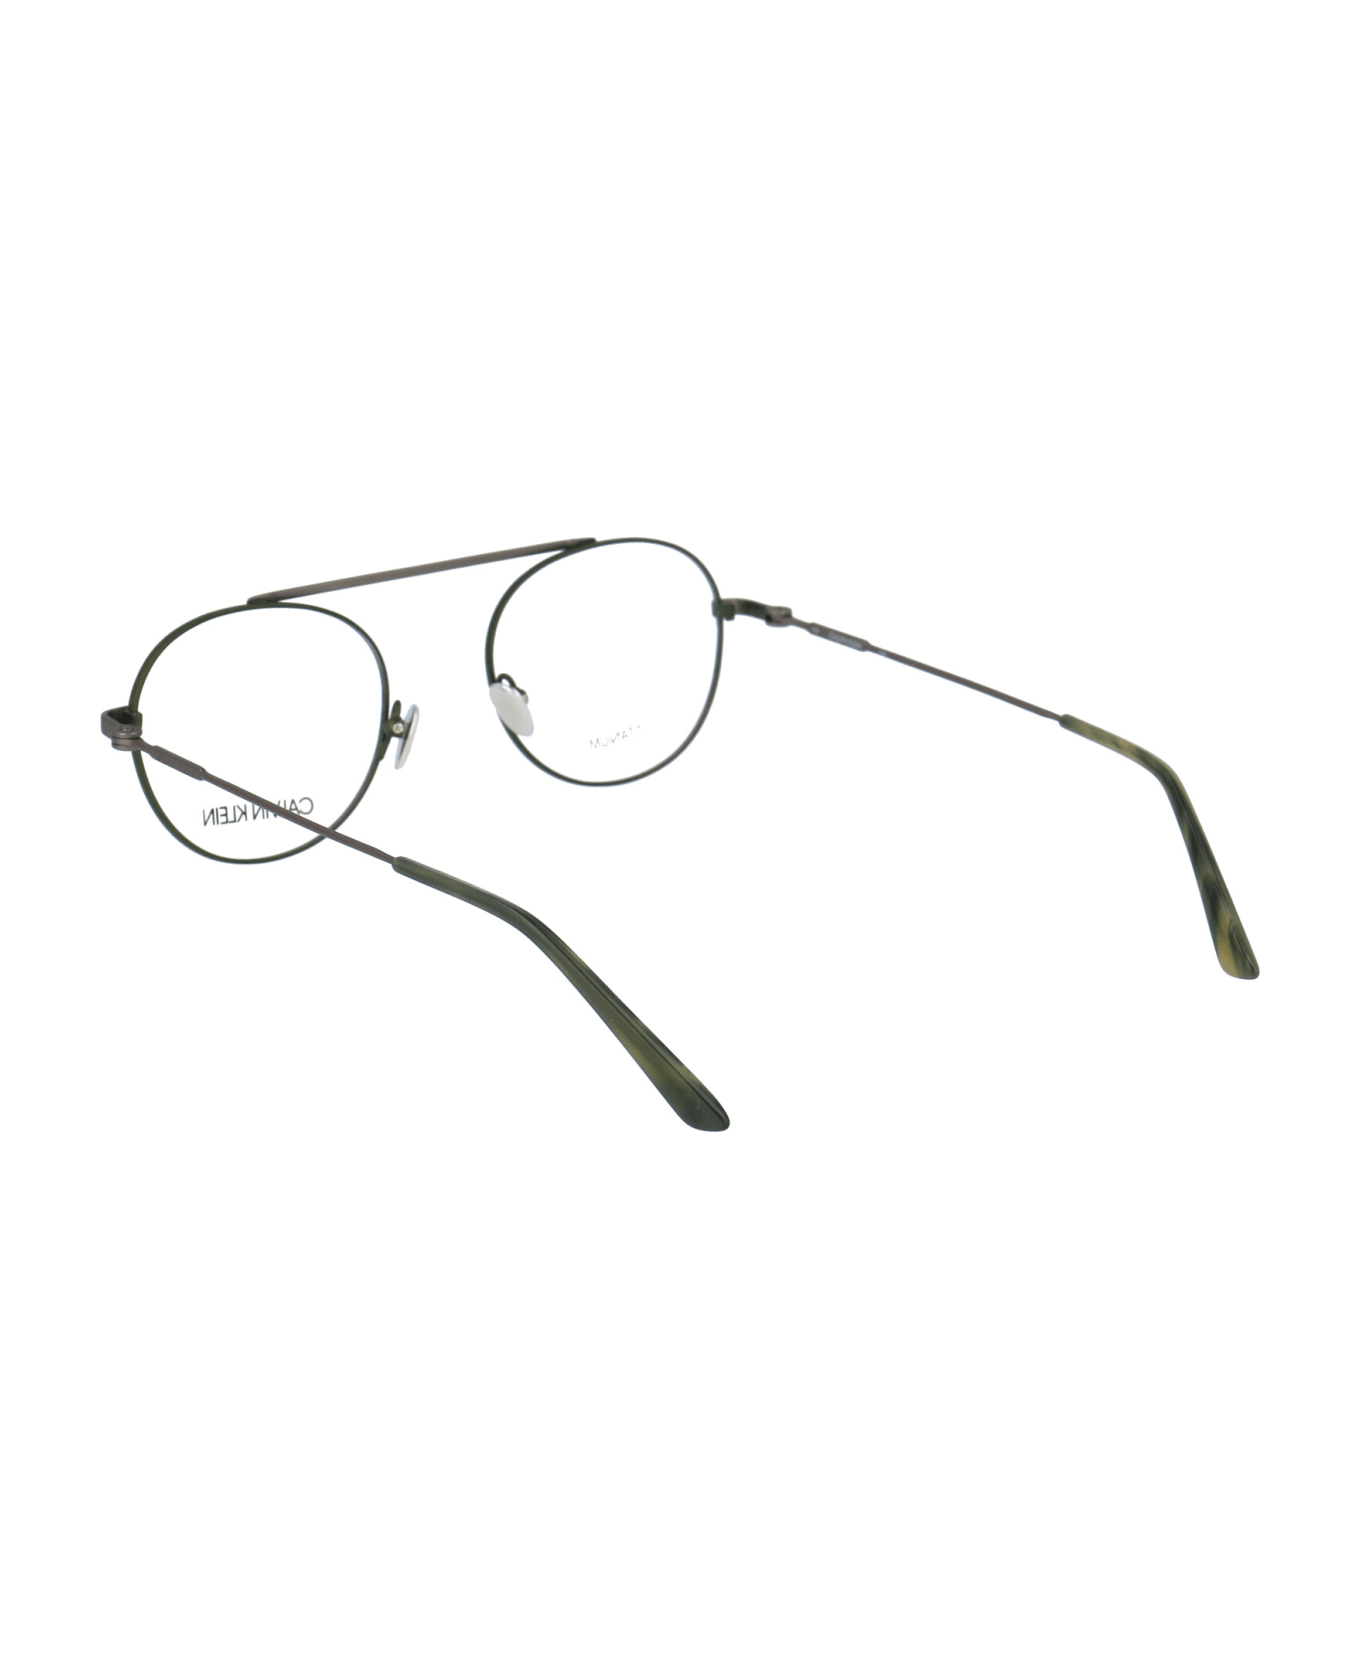 Calvin Klein Ck19151 Glasses - 306 MATTE HUNTER